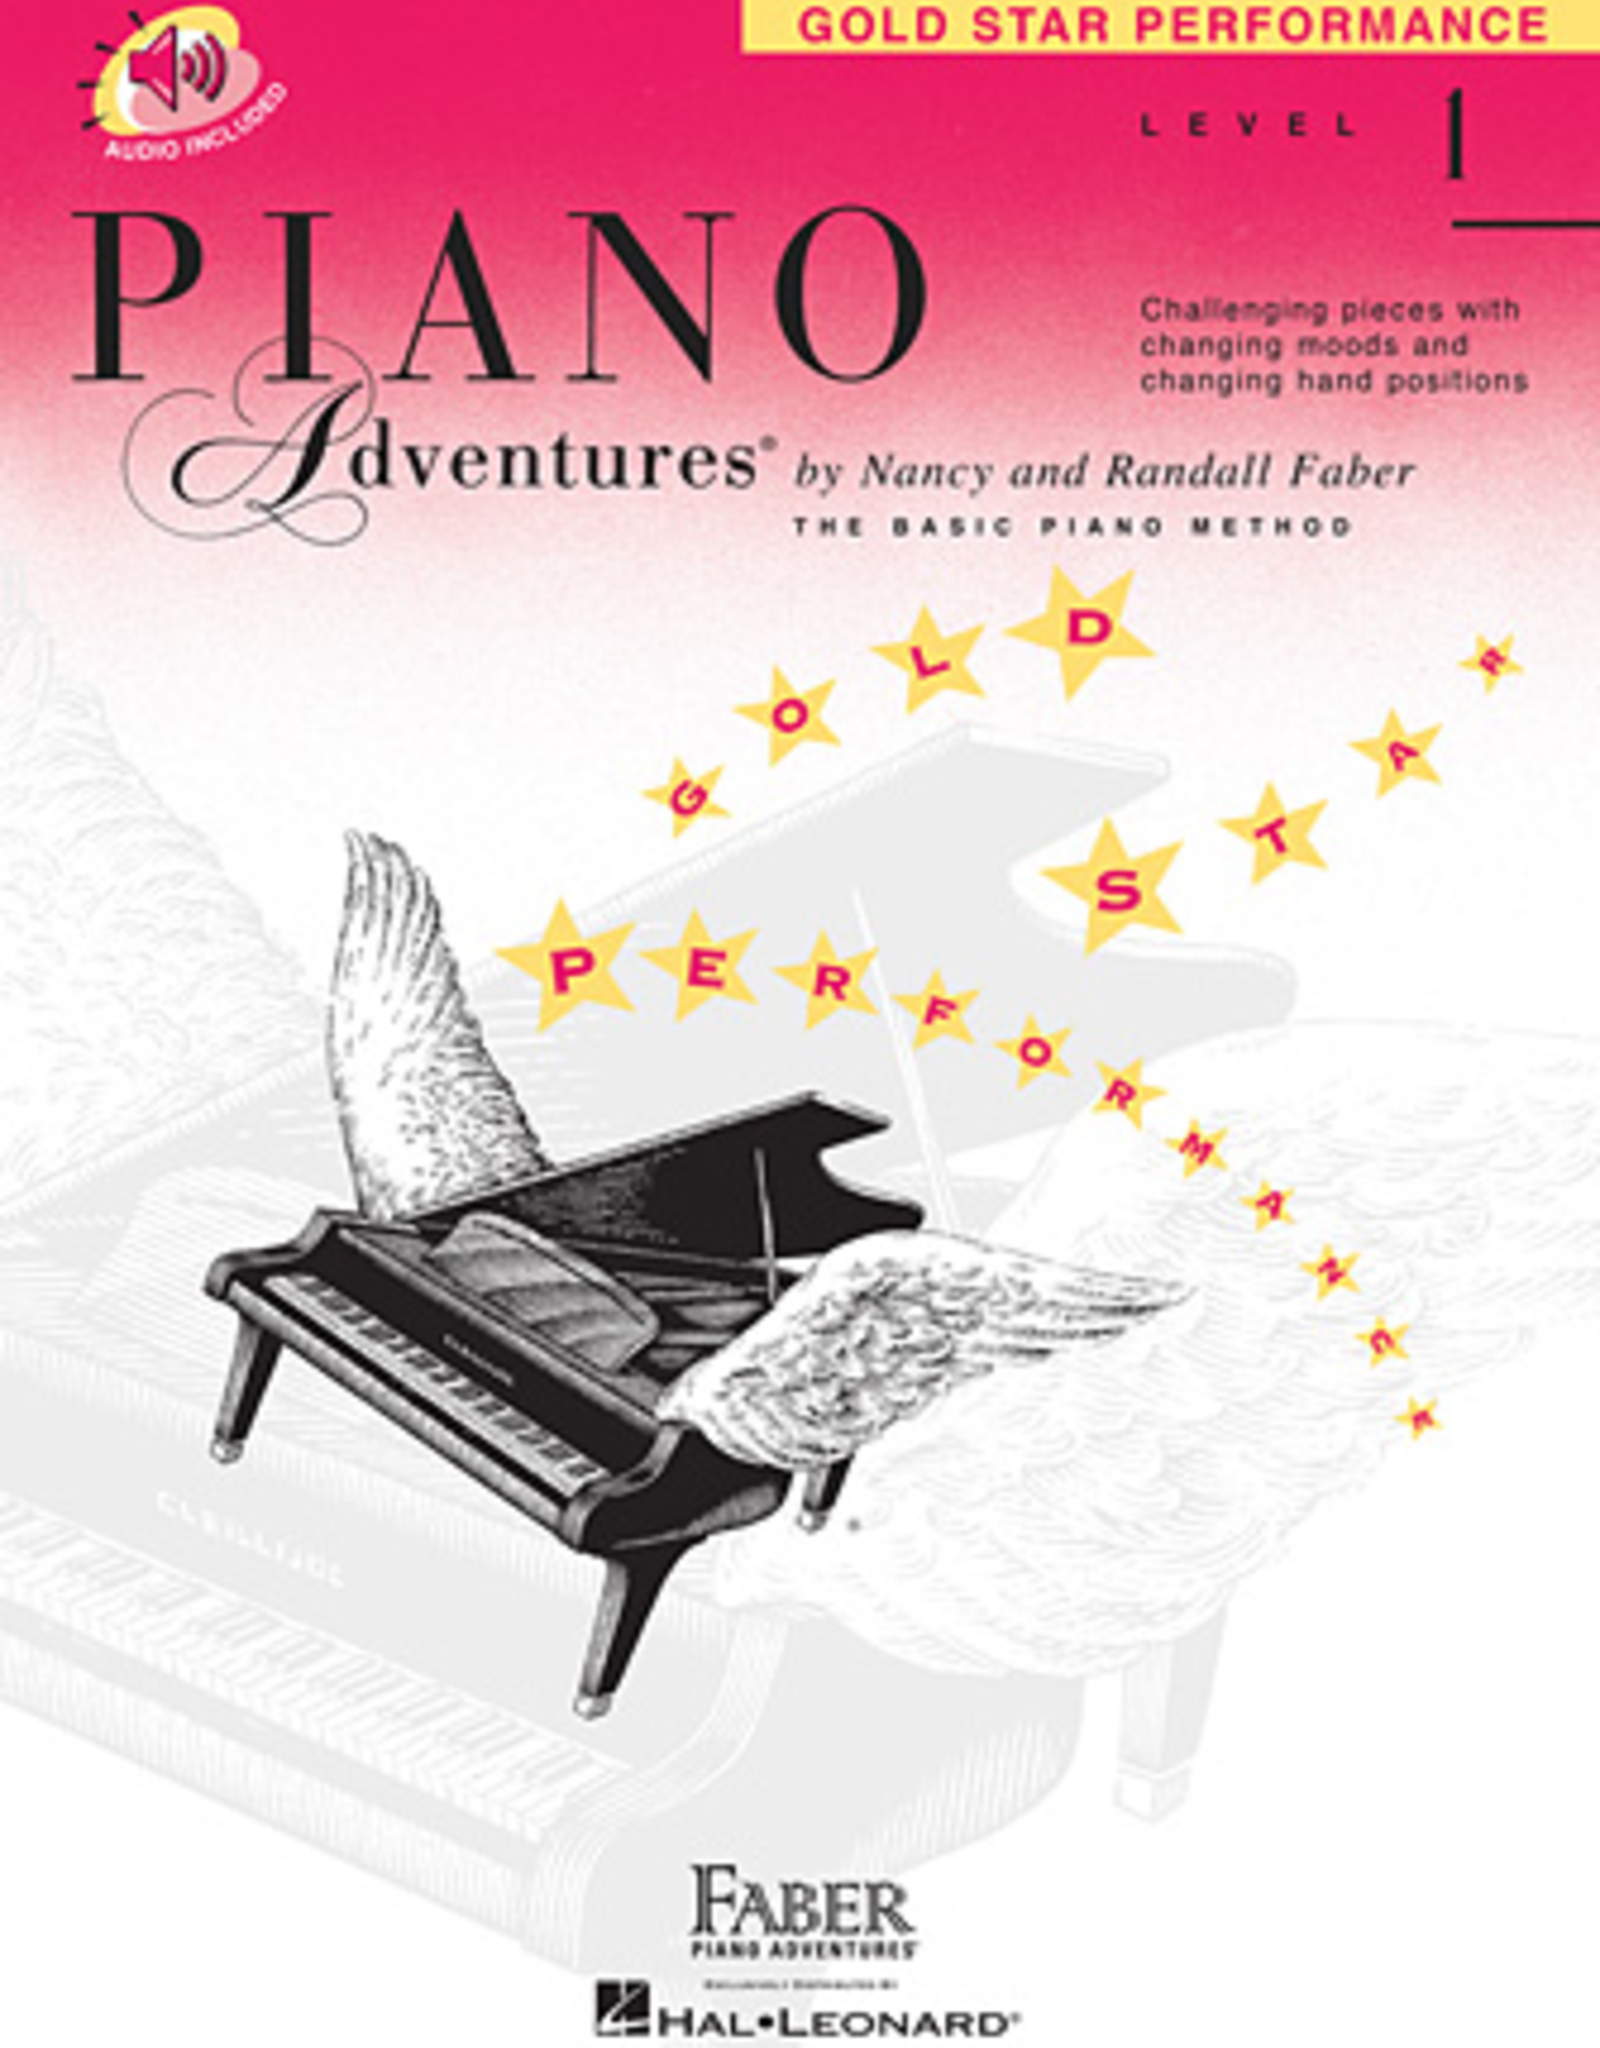 Hal Leonard Piano Adventures Gold Star Performance, Level 1 *